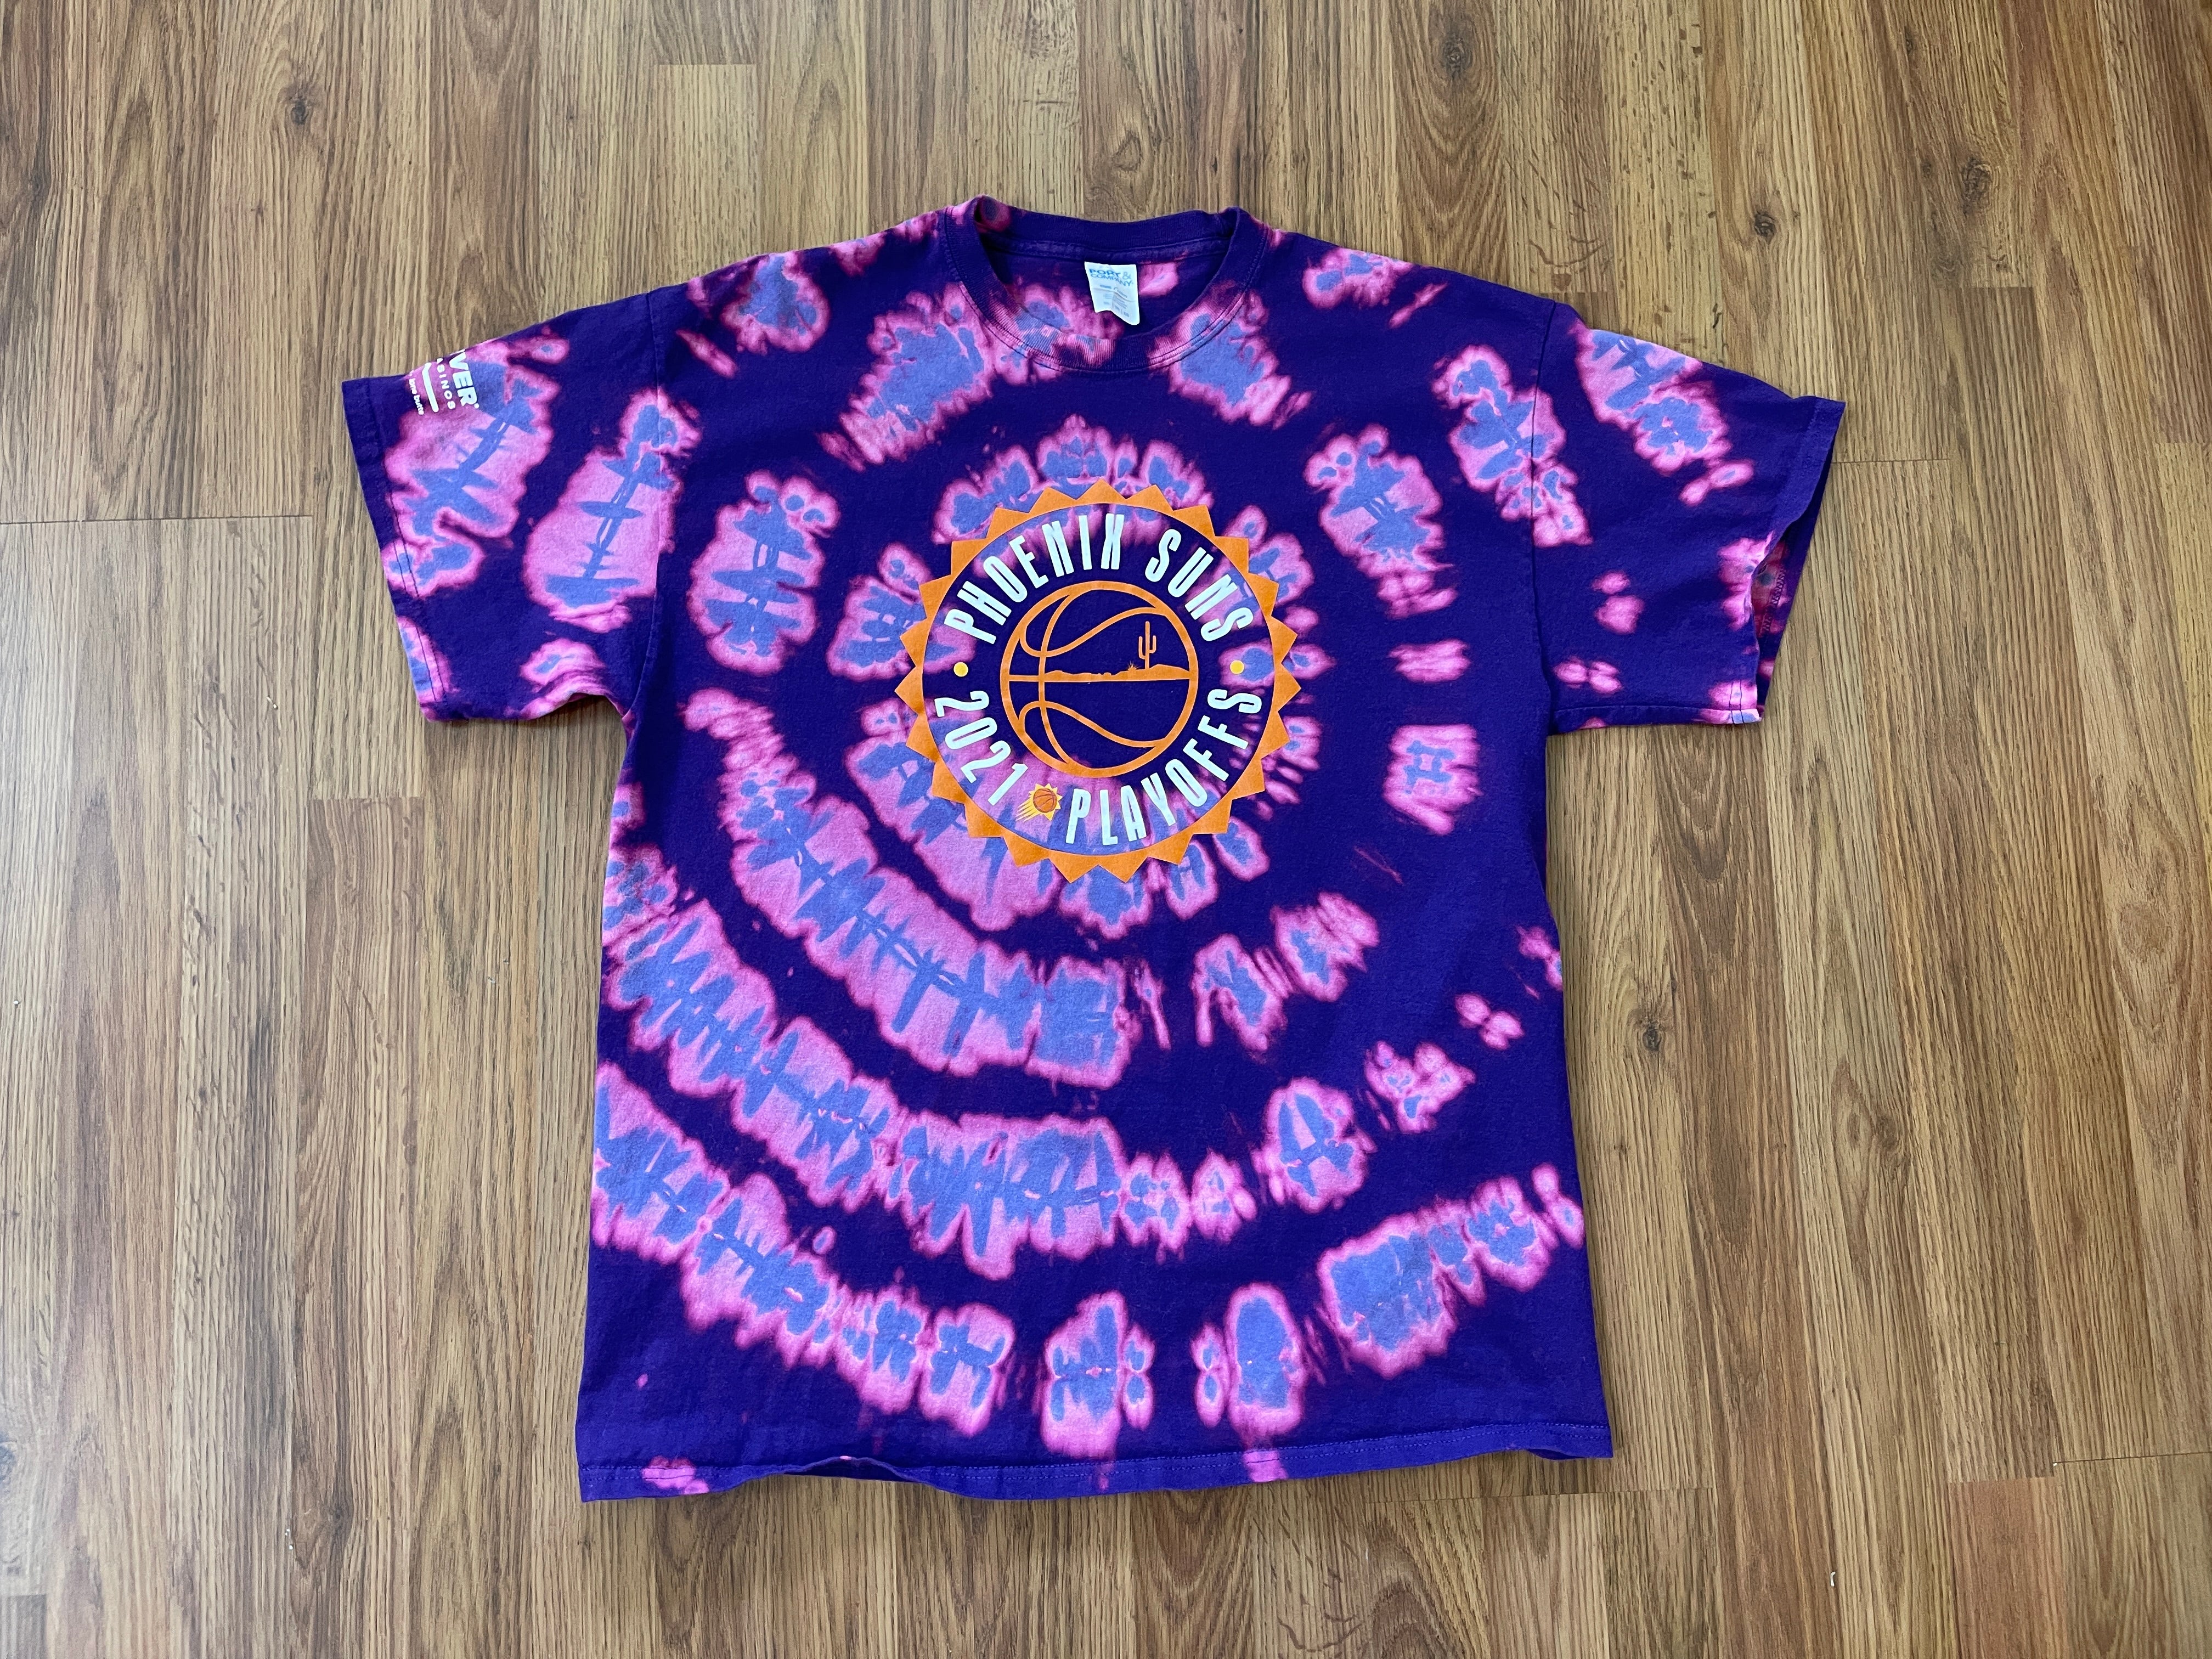 Preowned BVA Los Angels Lakers Basketvall Tie-Dye T-Shirt Size